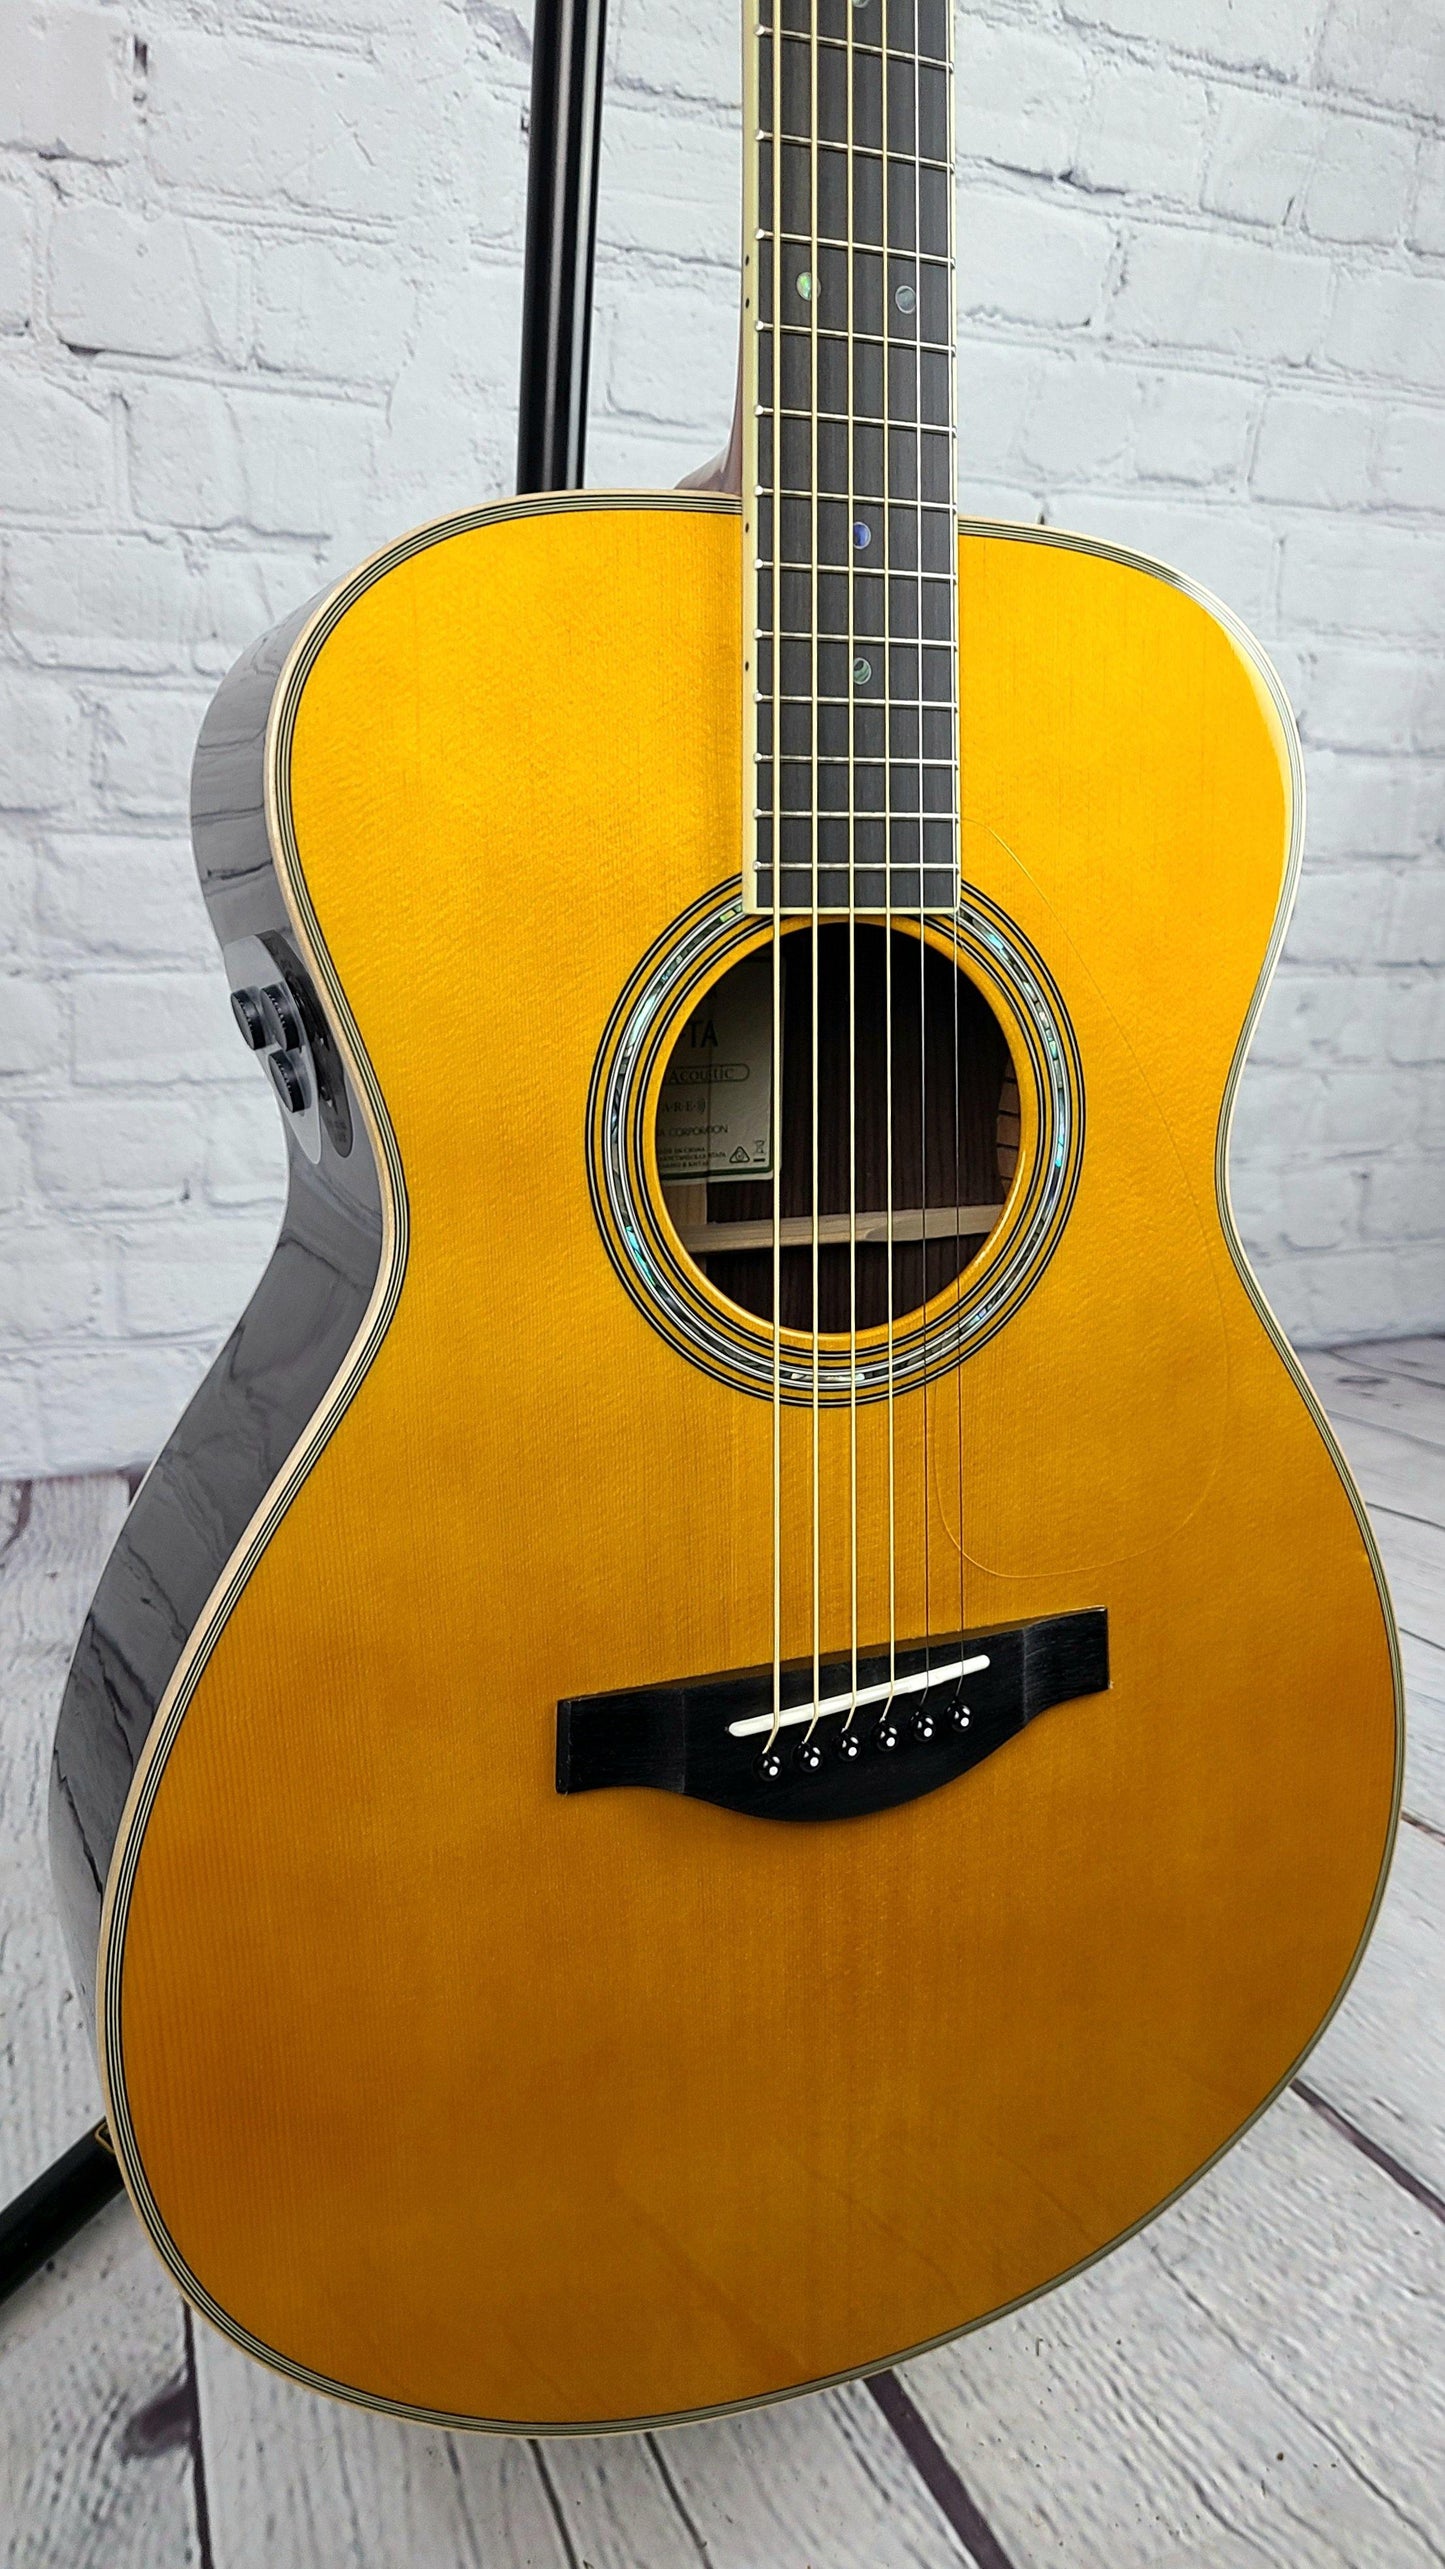 Yamaha LSTA VT TransAcoustic Concert Acoustic Guitar Vintage Tint - Guitar Brando